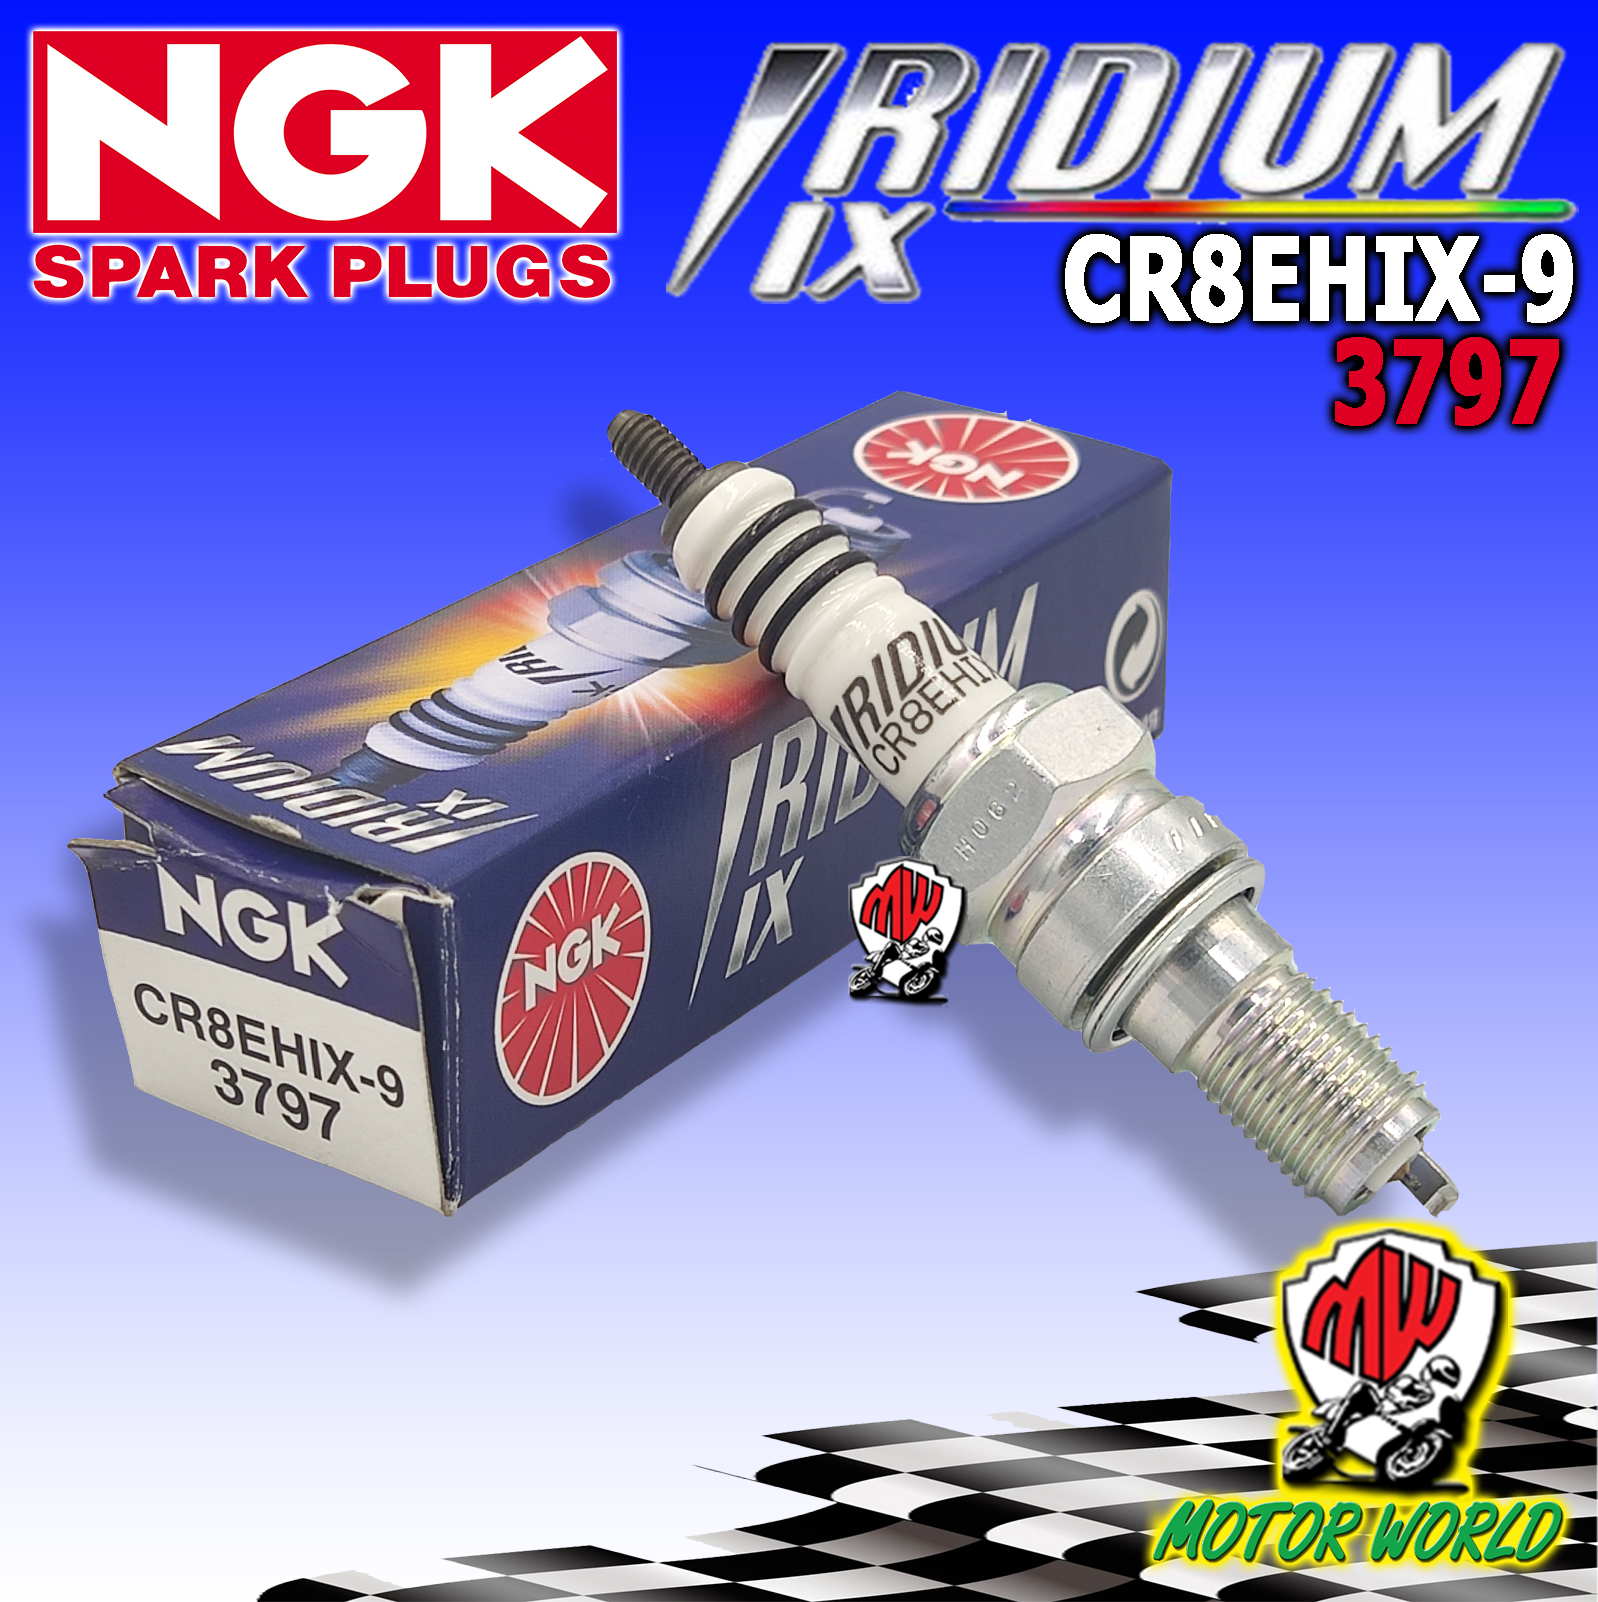 Bougie NGK iridium type CR8EHIX-9 référence 3797